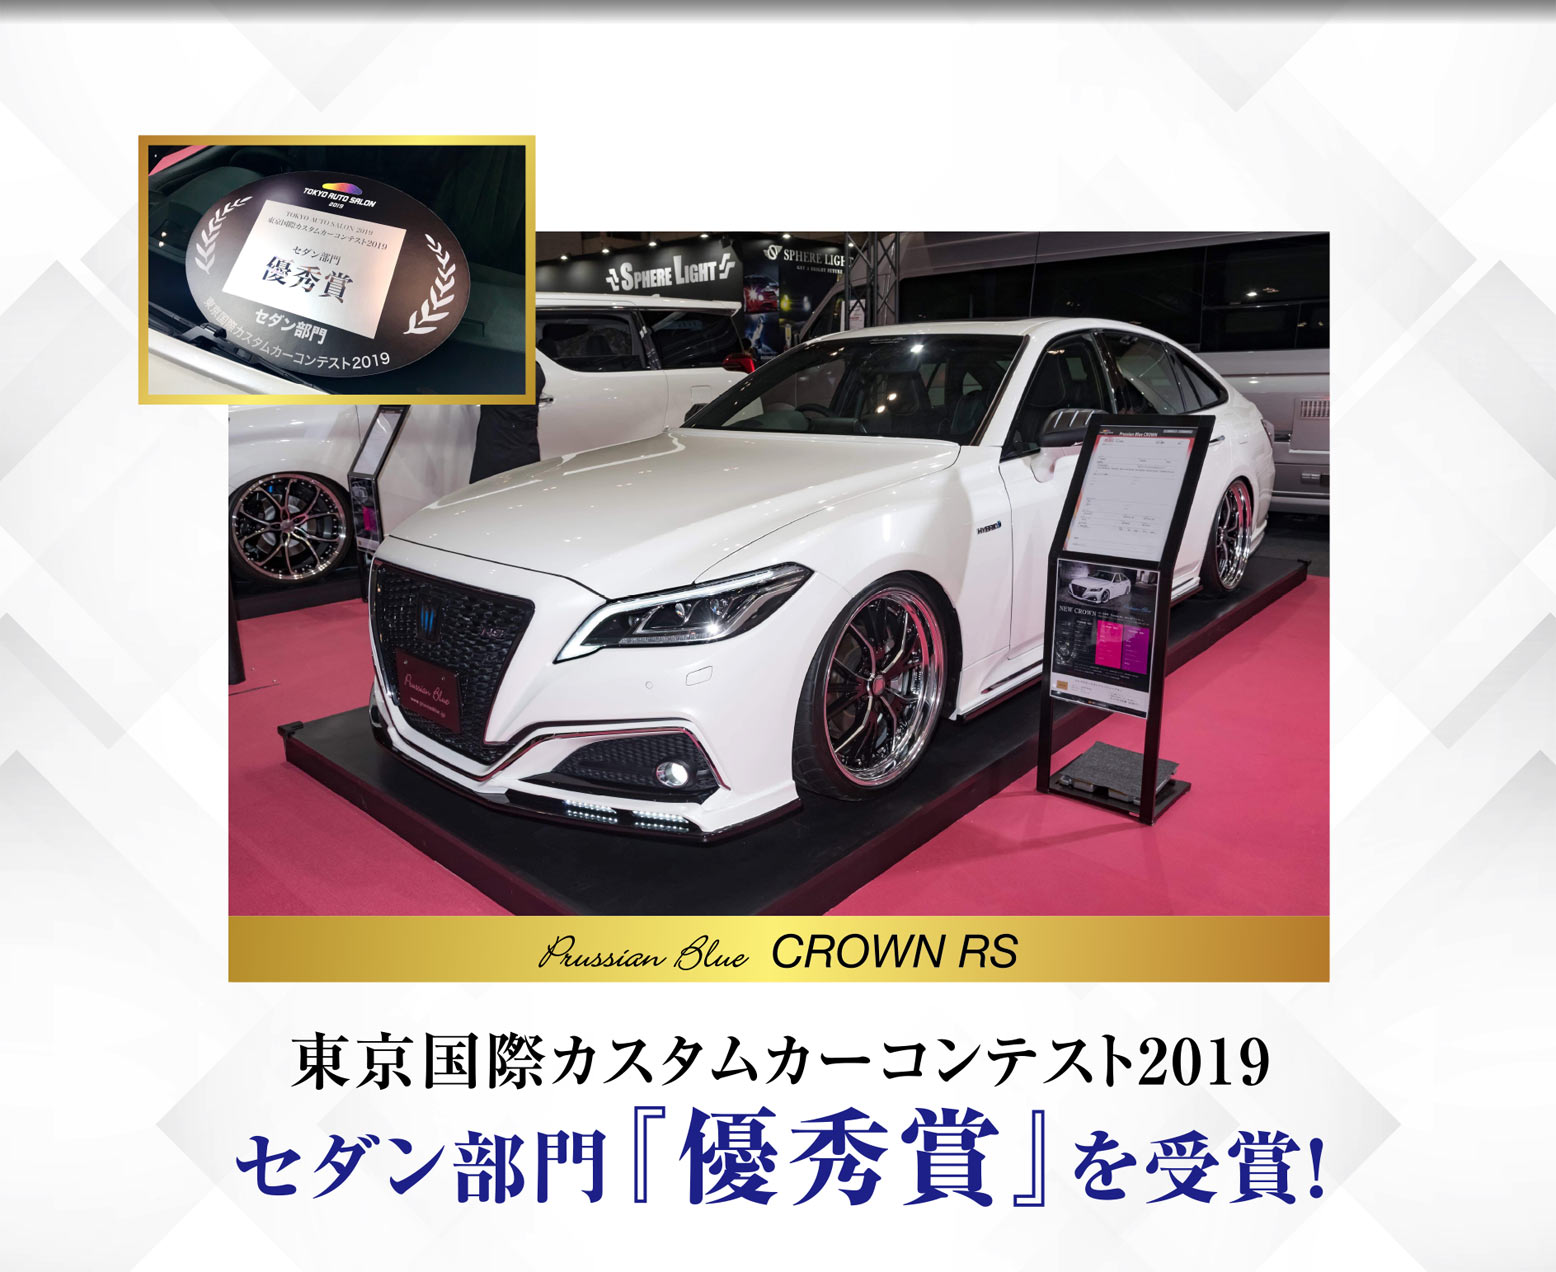 CROWN RS 東京国際カスタムカーコンテスト2019 セダン部門「優秀賞」を受賞！